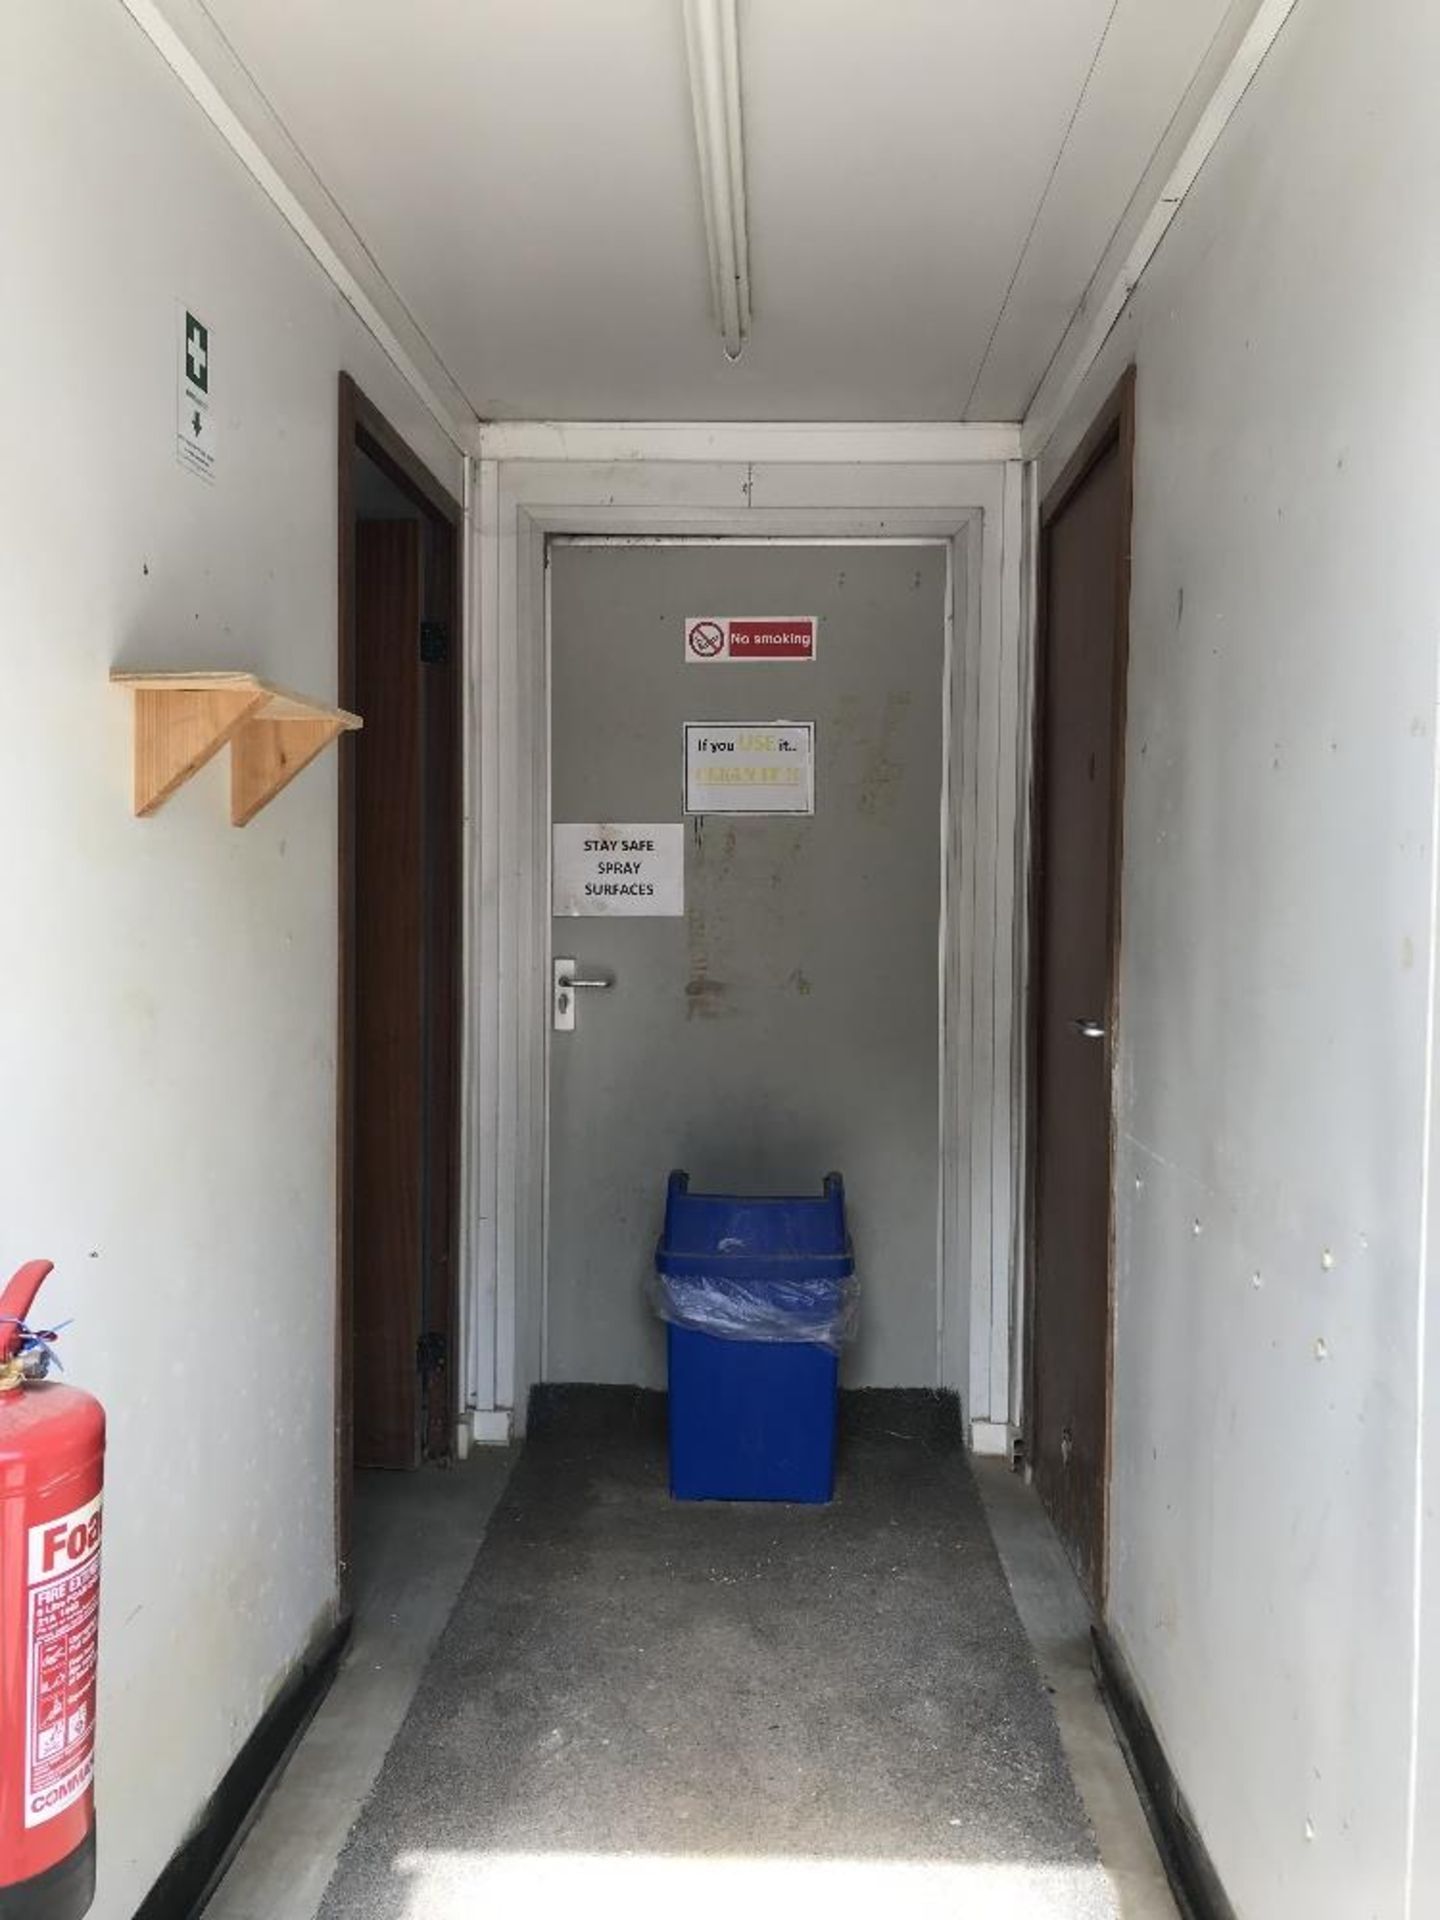 Portacabin jack legged staff toilet unit - Bild 4 aus 12